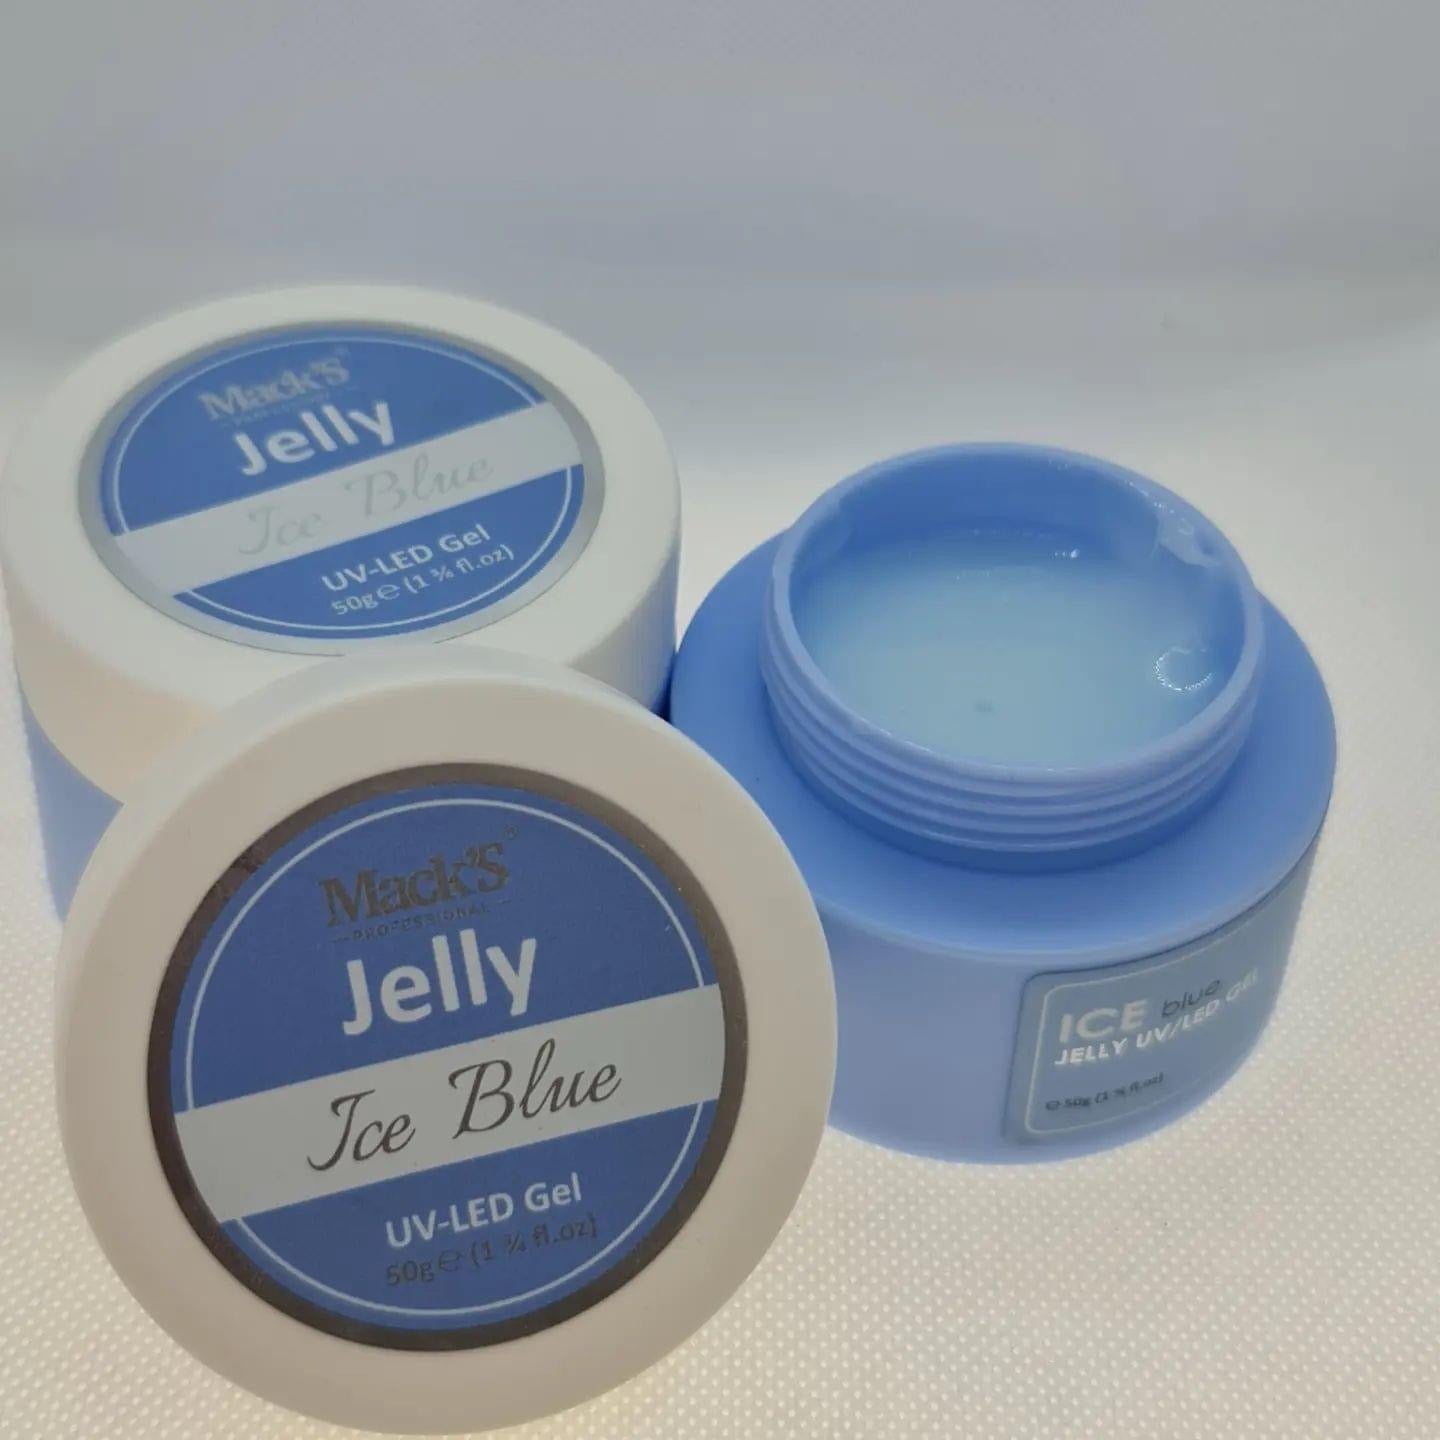 Mack’s Builder Jelly Gel - Ice Blue